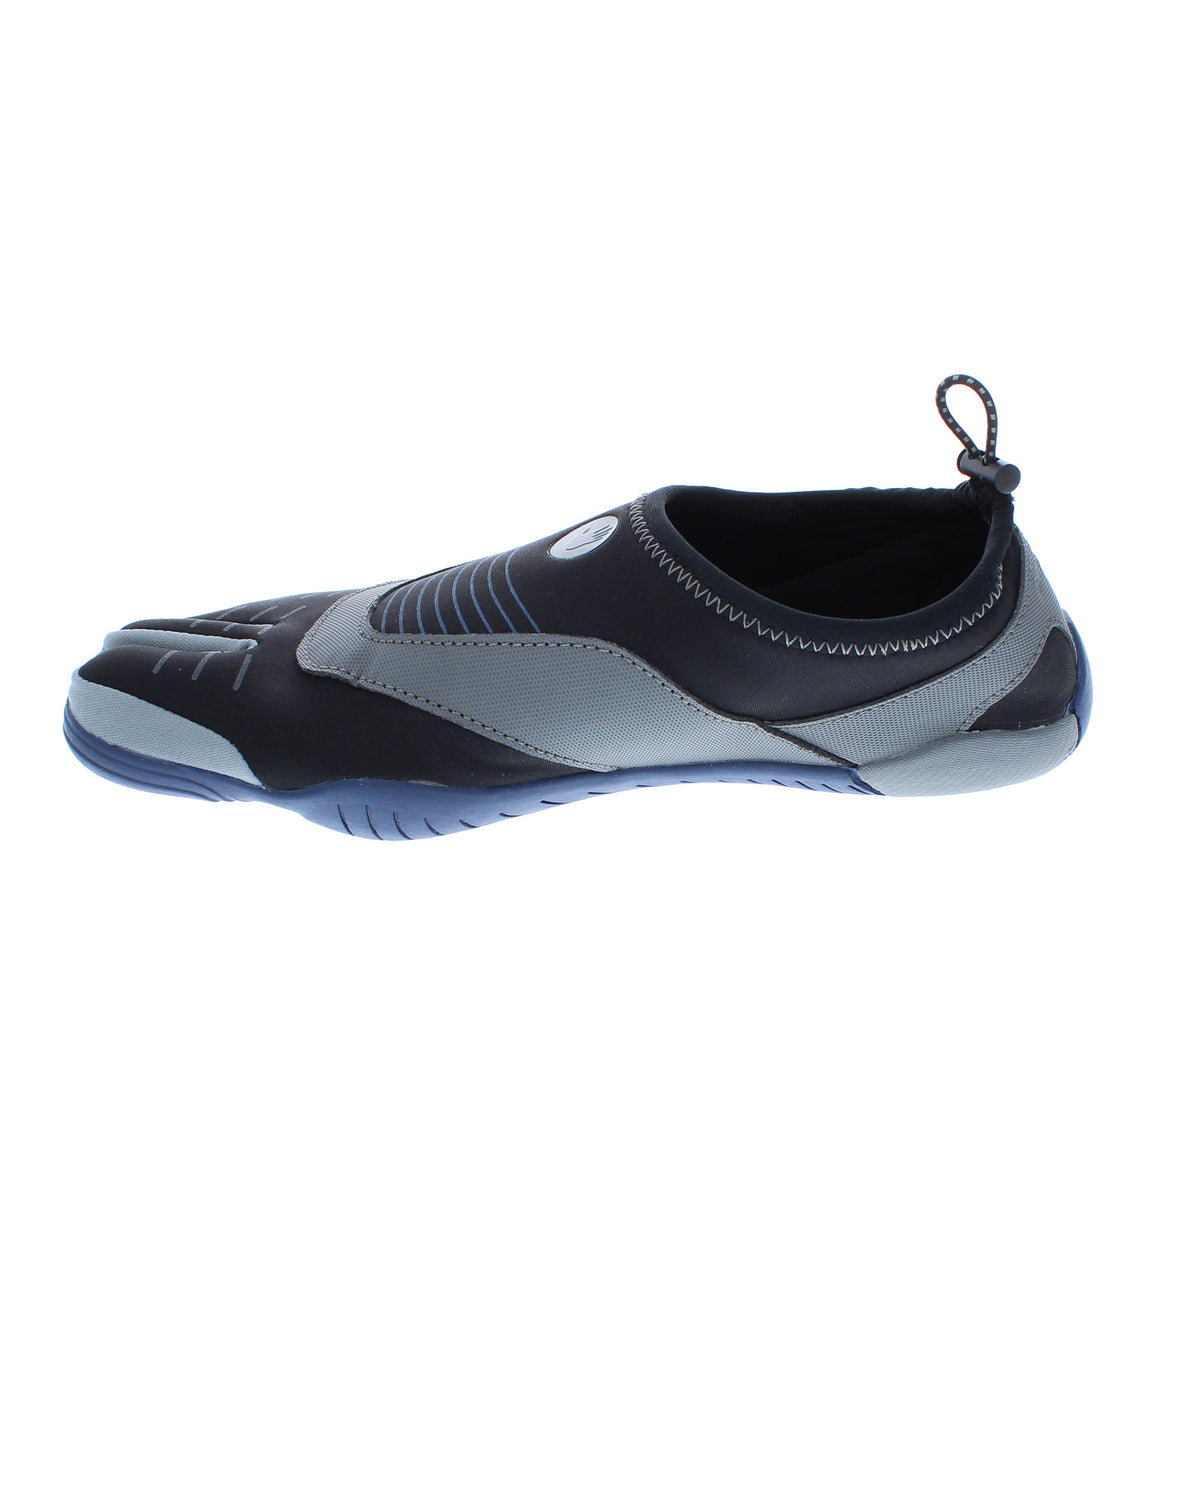 Men's 3T Barefoot Cinch Water Shoes - Black/Indigo - Body Glove